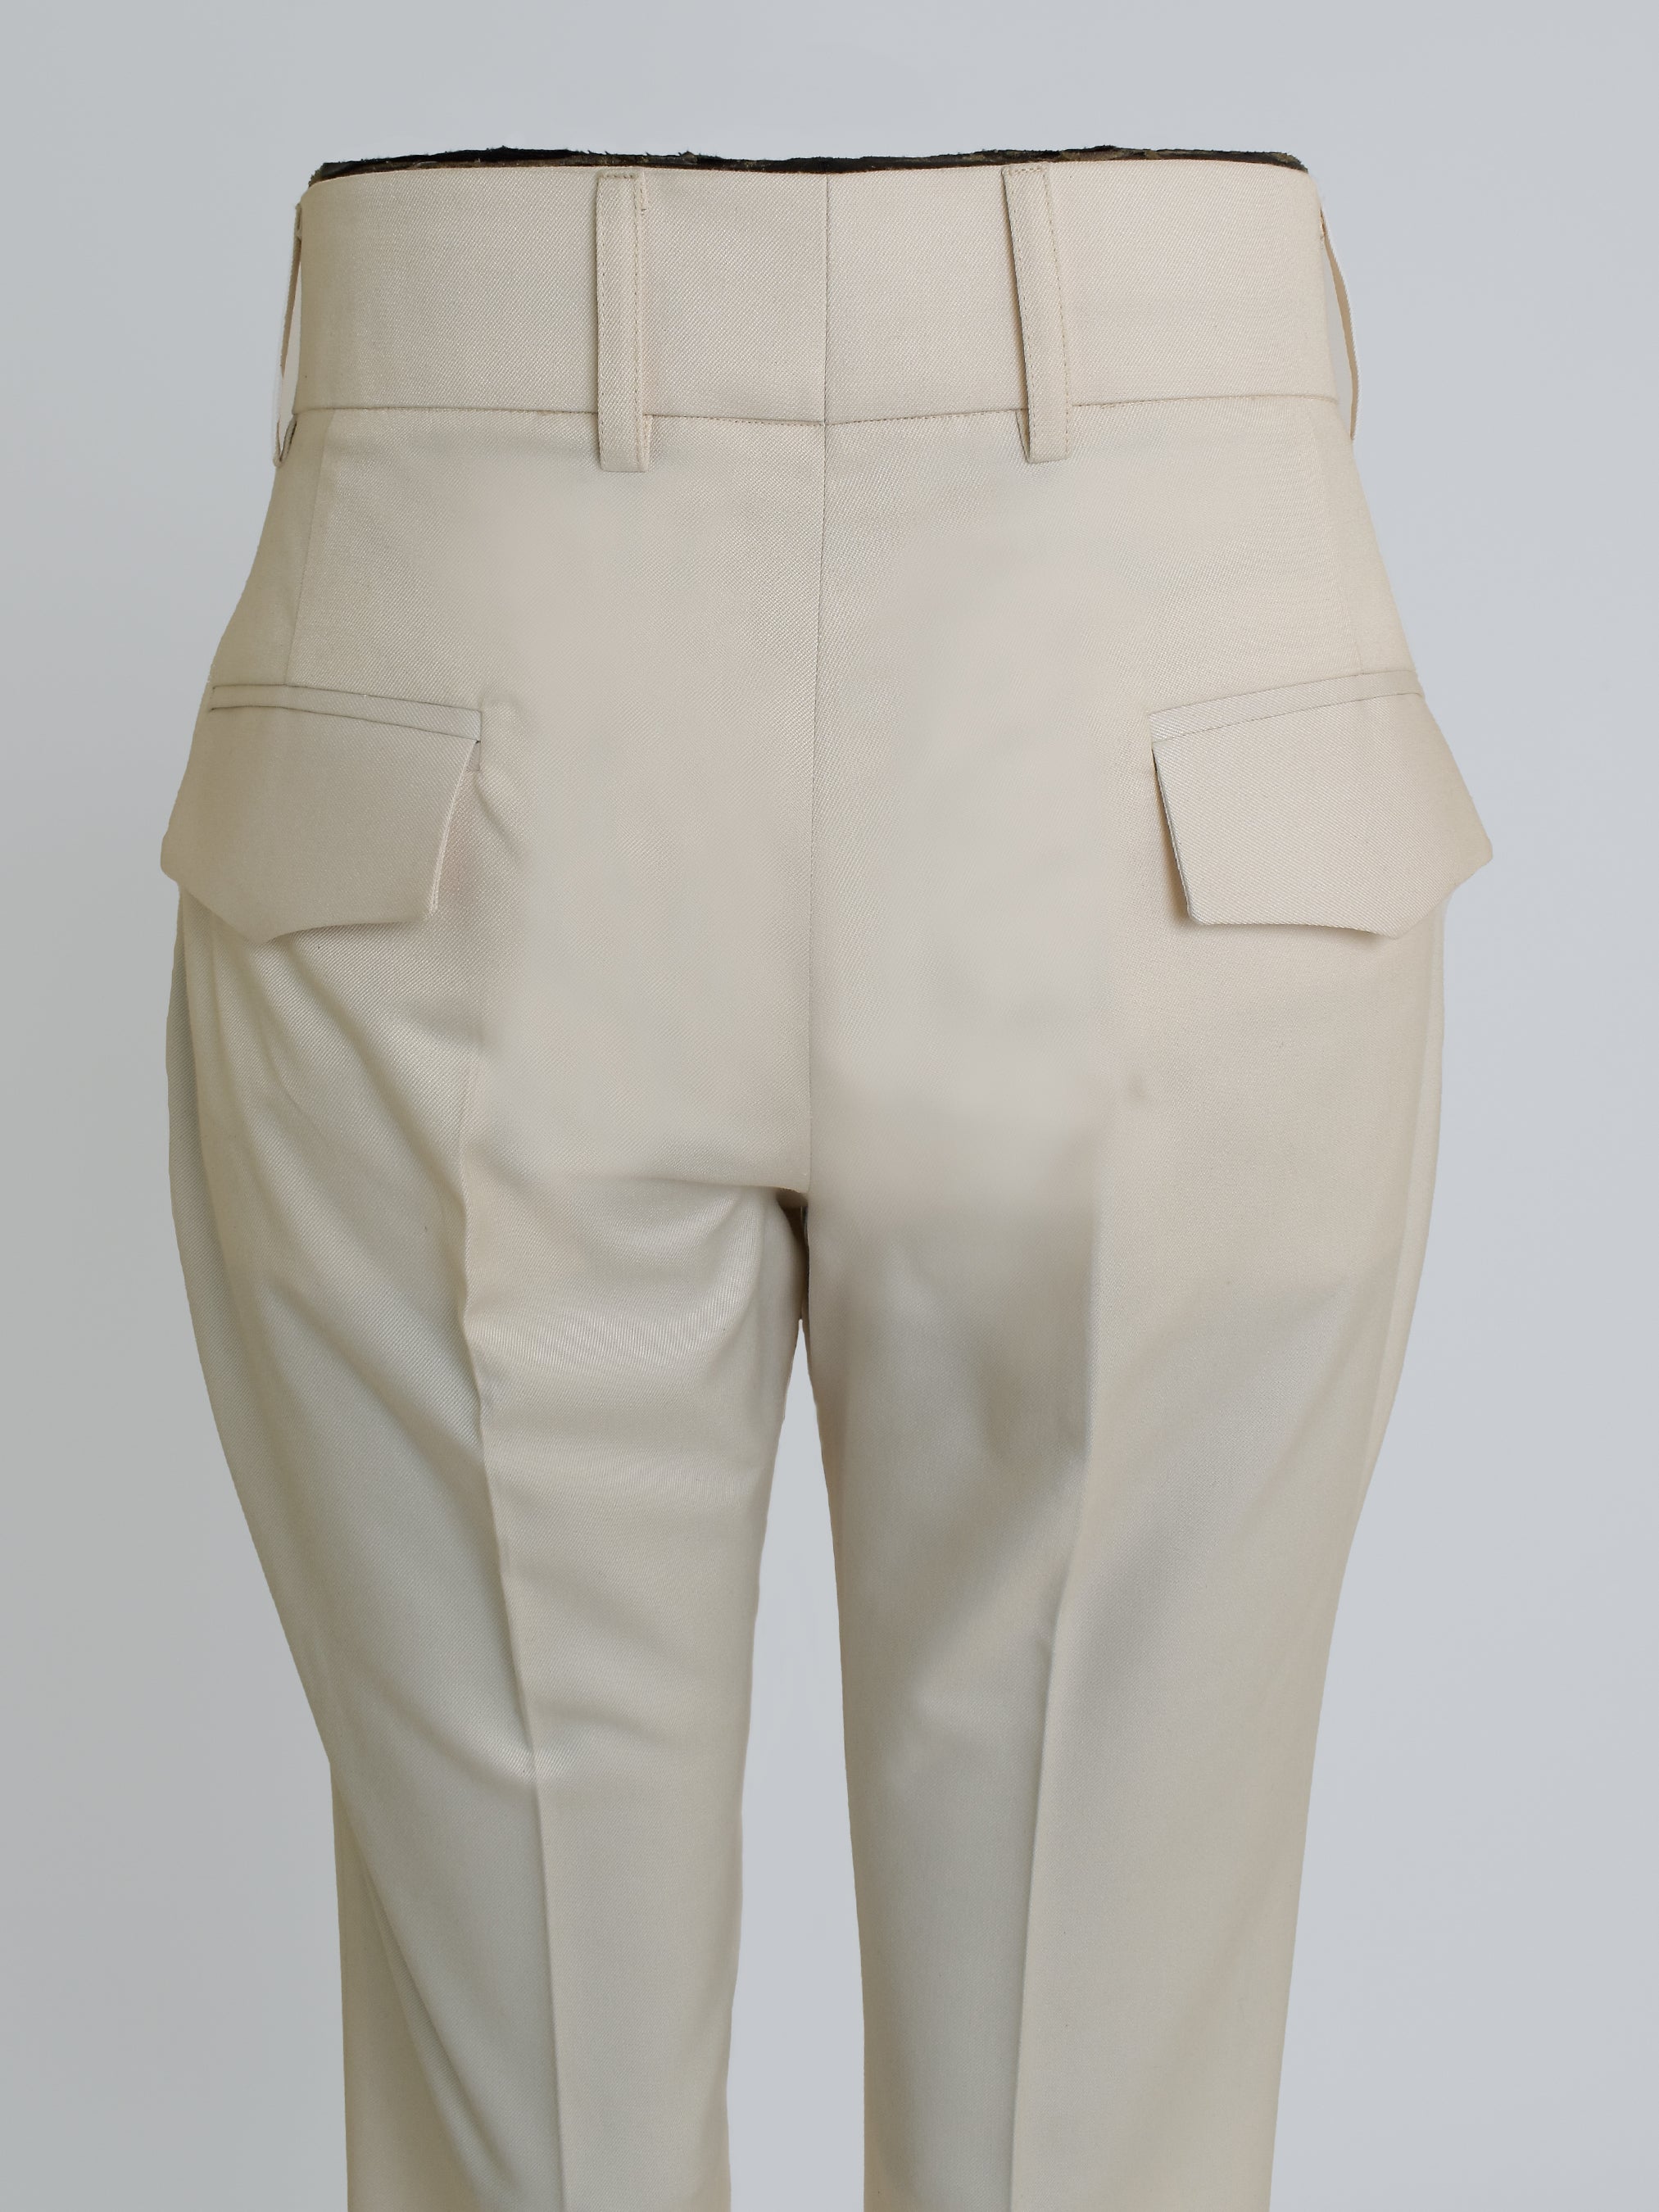 Gurkha Garrison Trousers